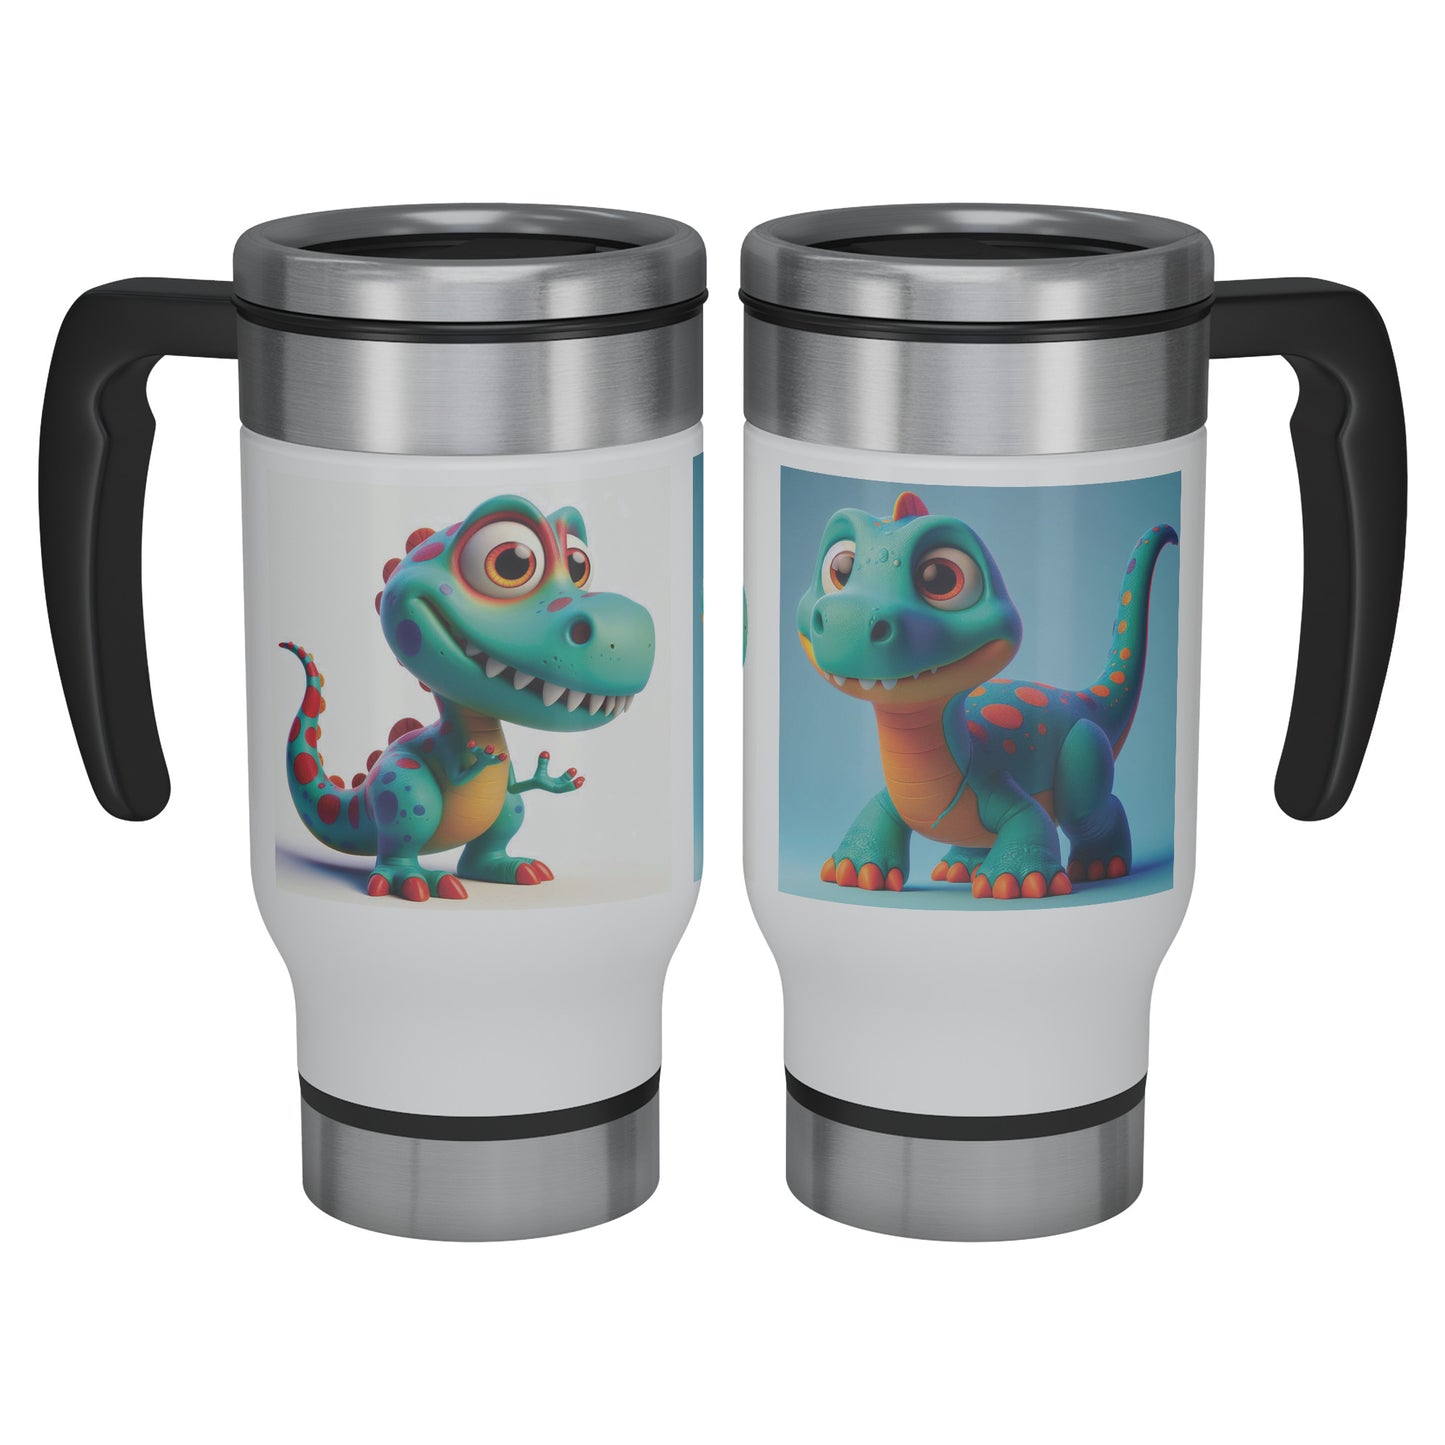 Adorable & Charming Dinosaurs - Travel Mug - Dinosaur #5